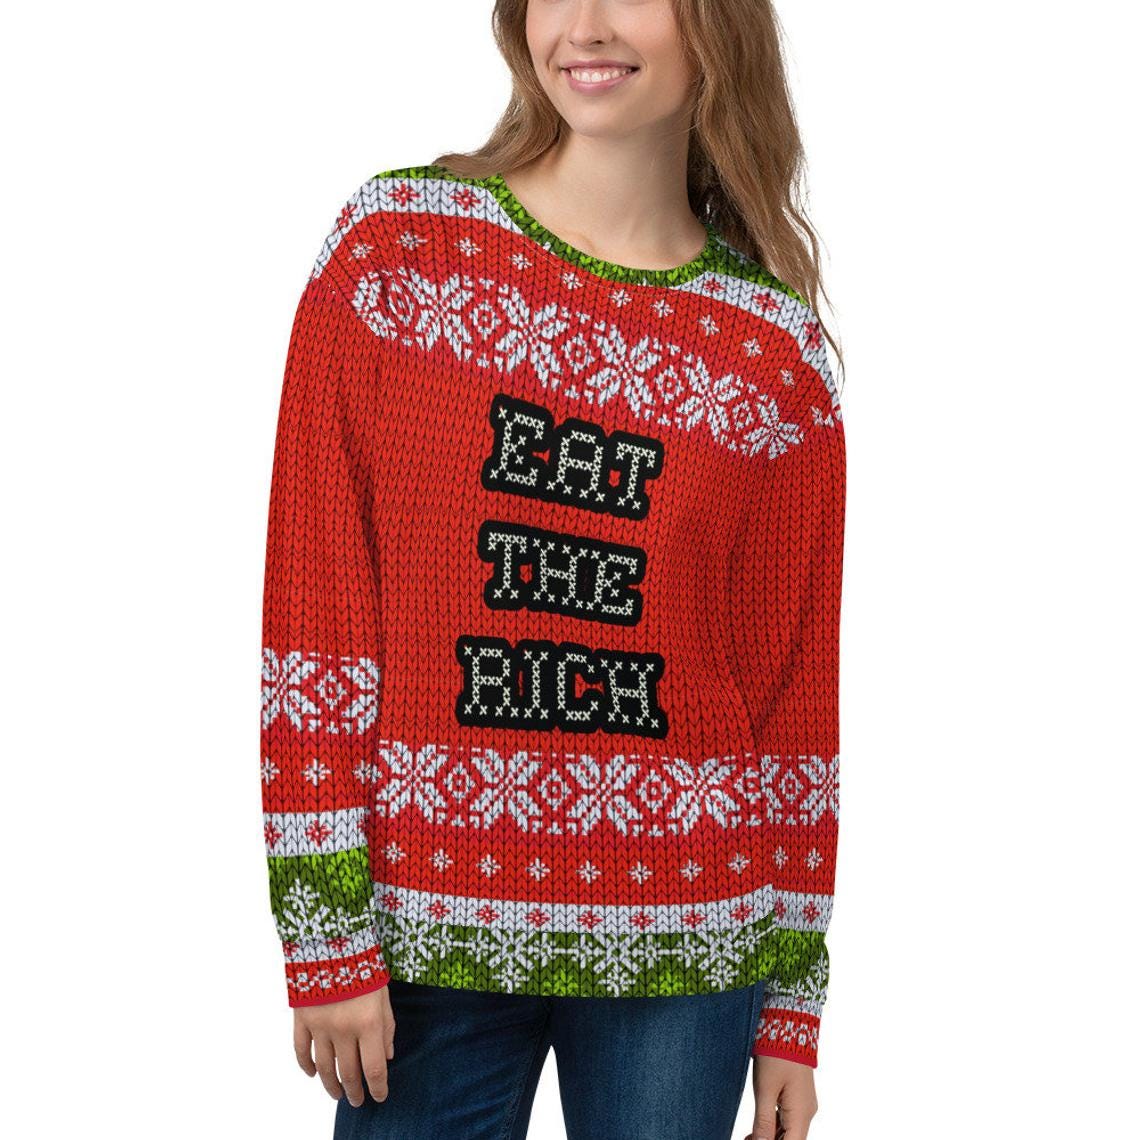 Eat The Rich Christmas Sweatshirt image 0